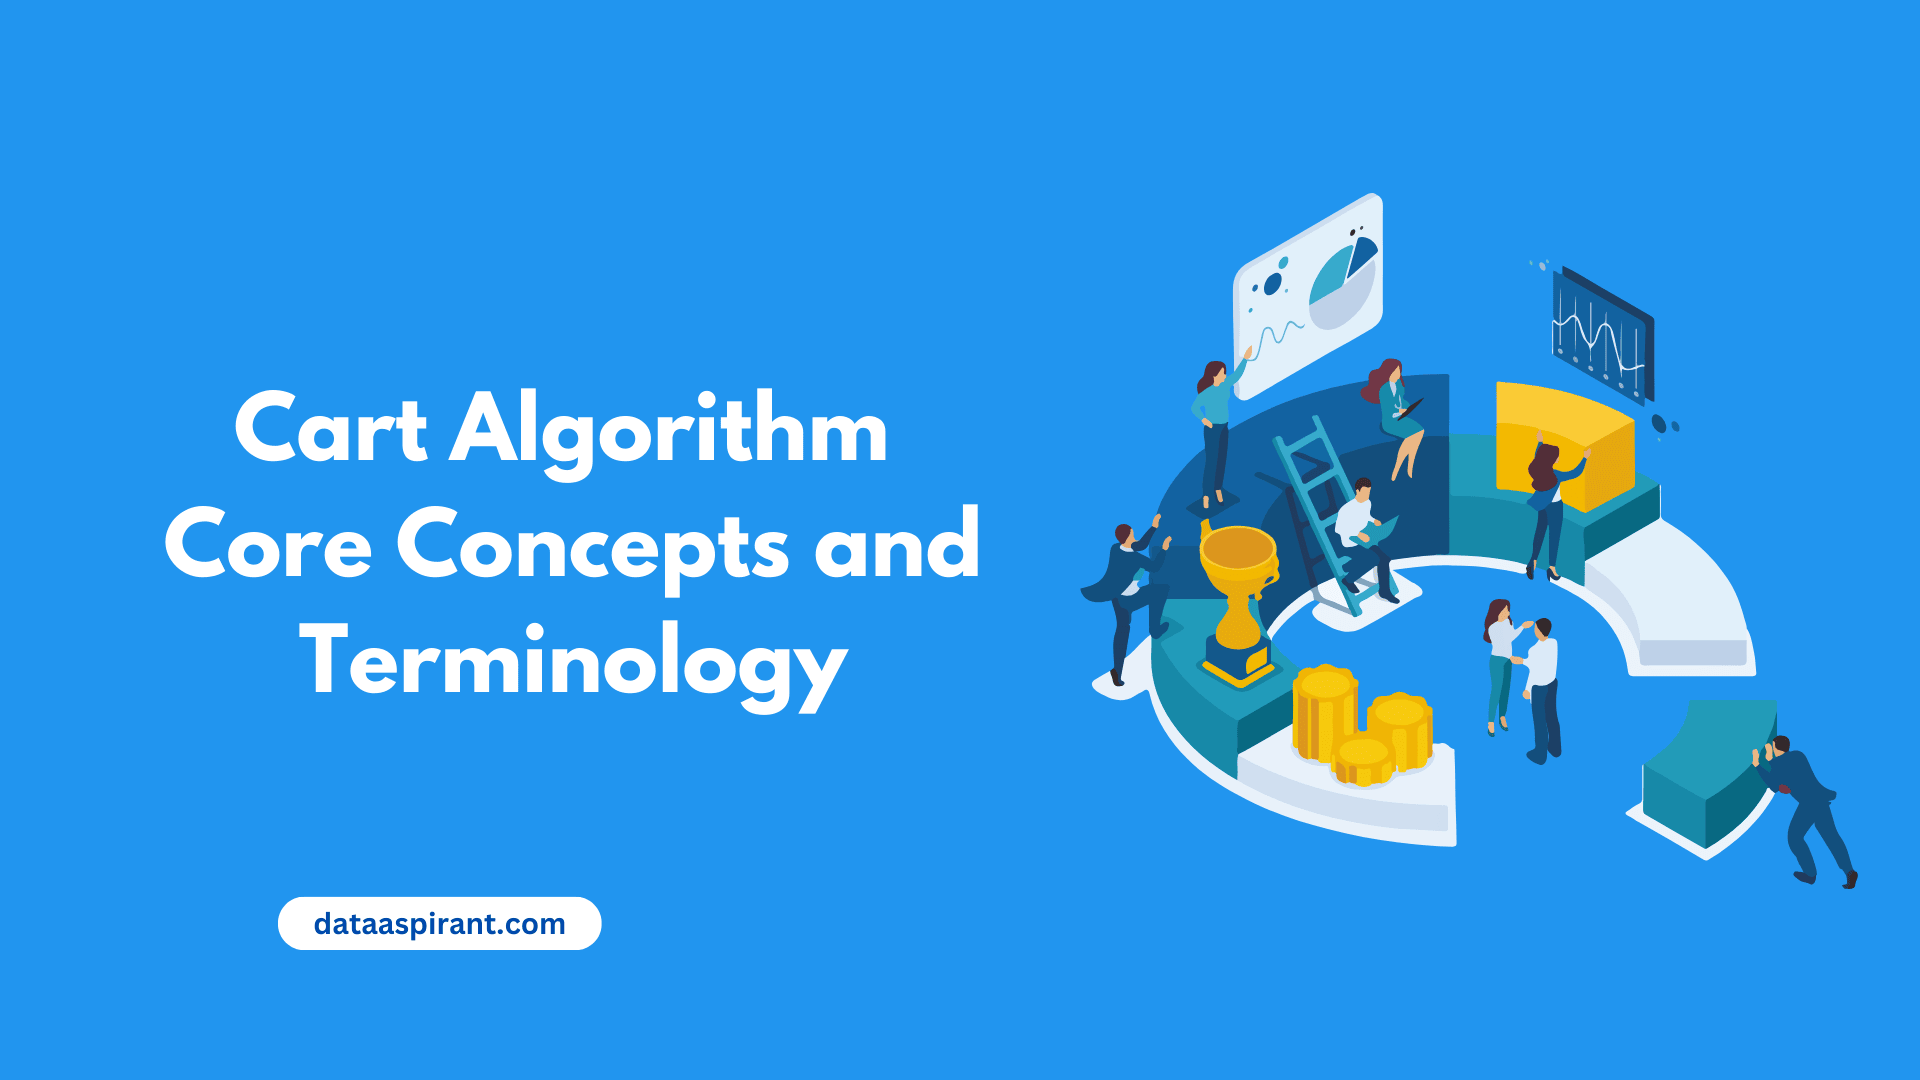 Cart Algorithm Core Concepts and Terminology